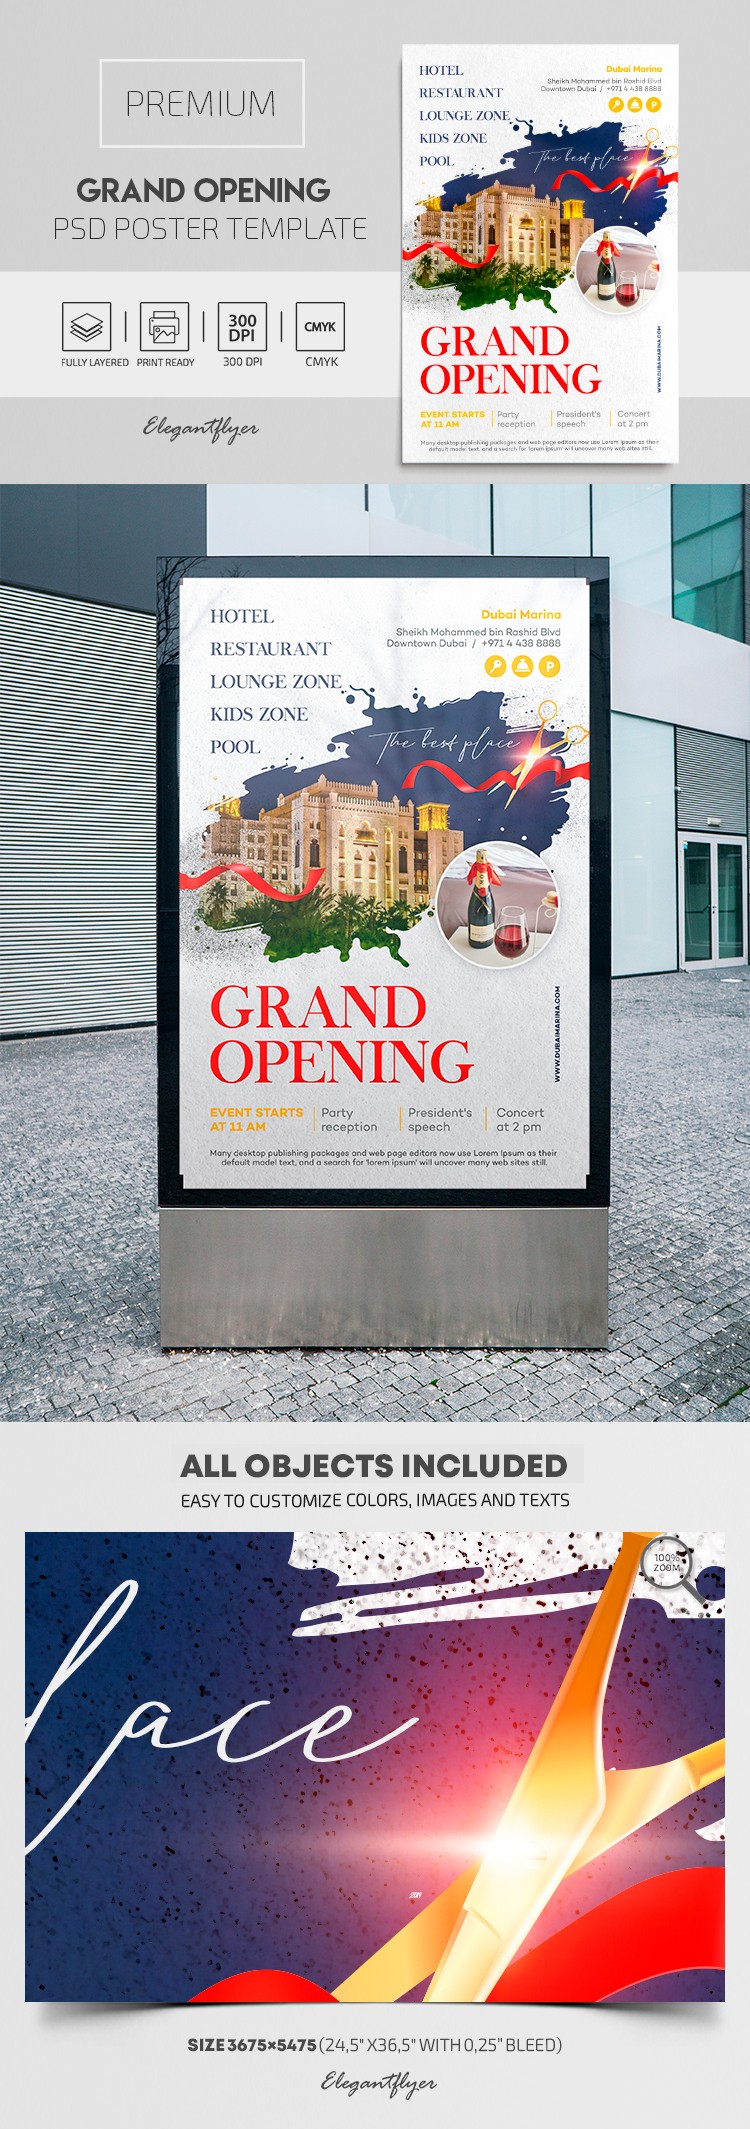 Grand Opening Poster by ElegantFlyer